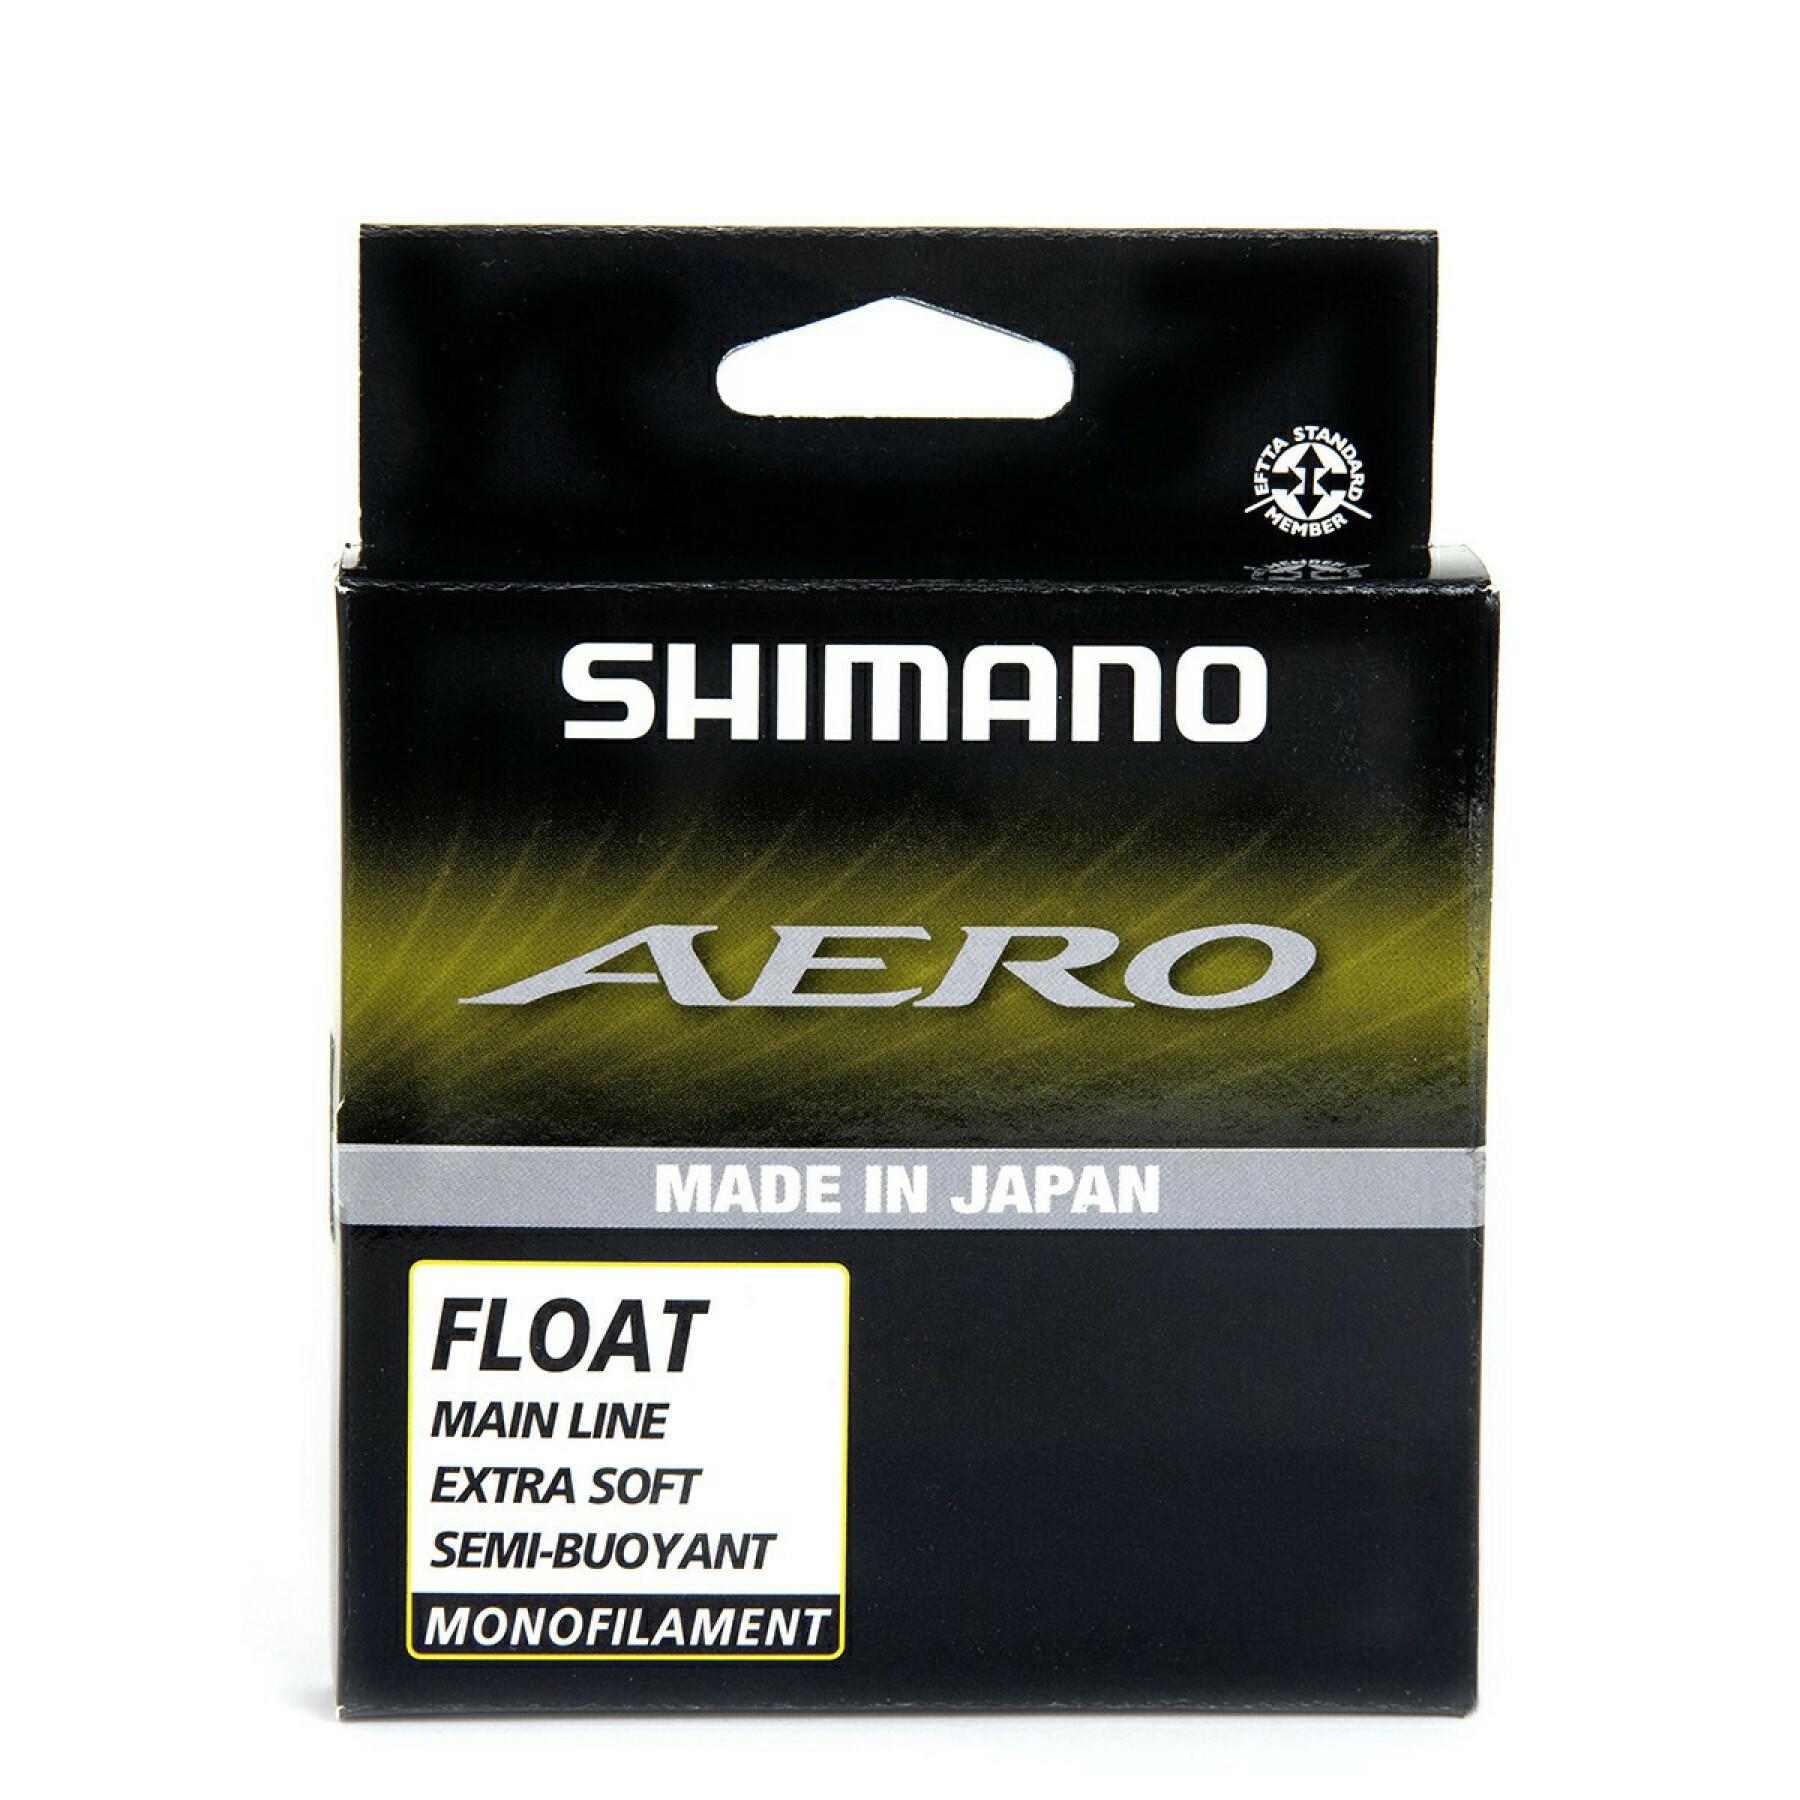 Monofilament Shimano Aero Float Line 150m